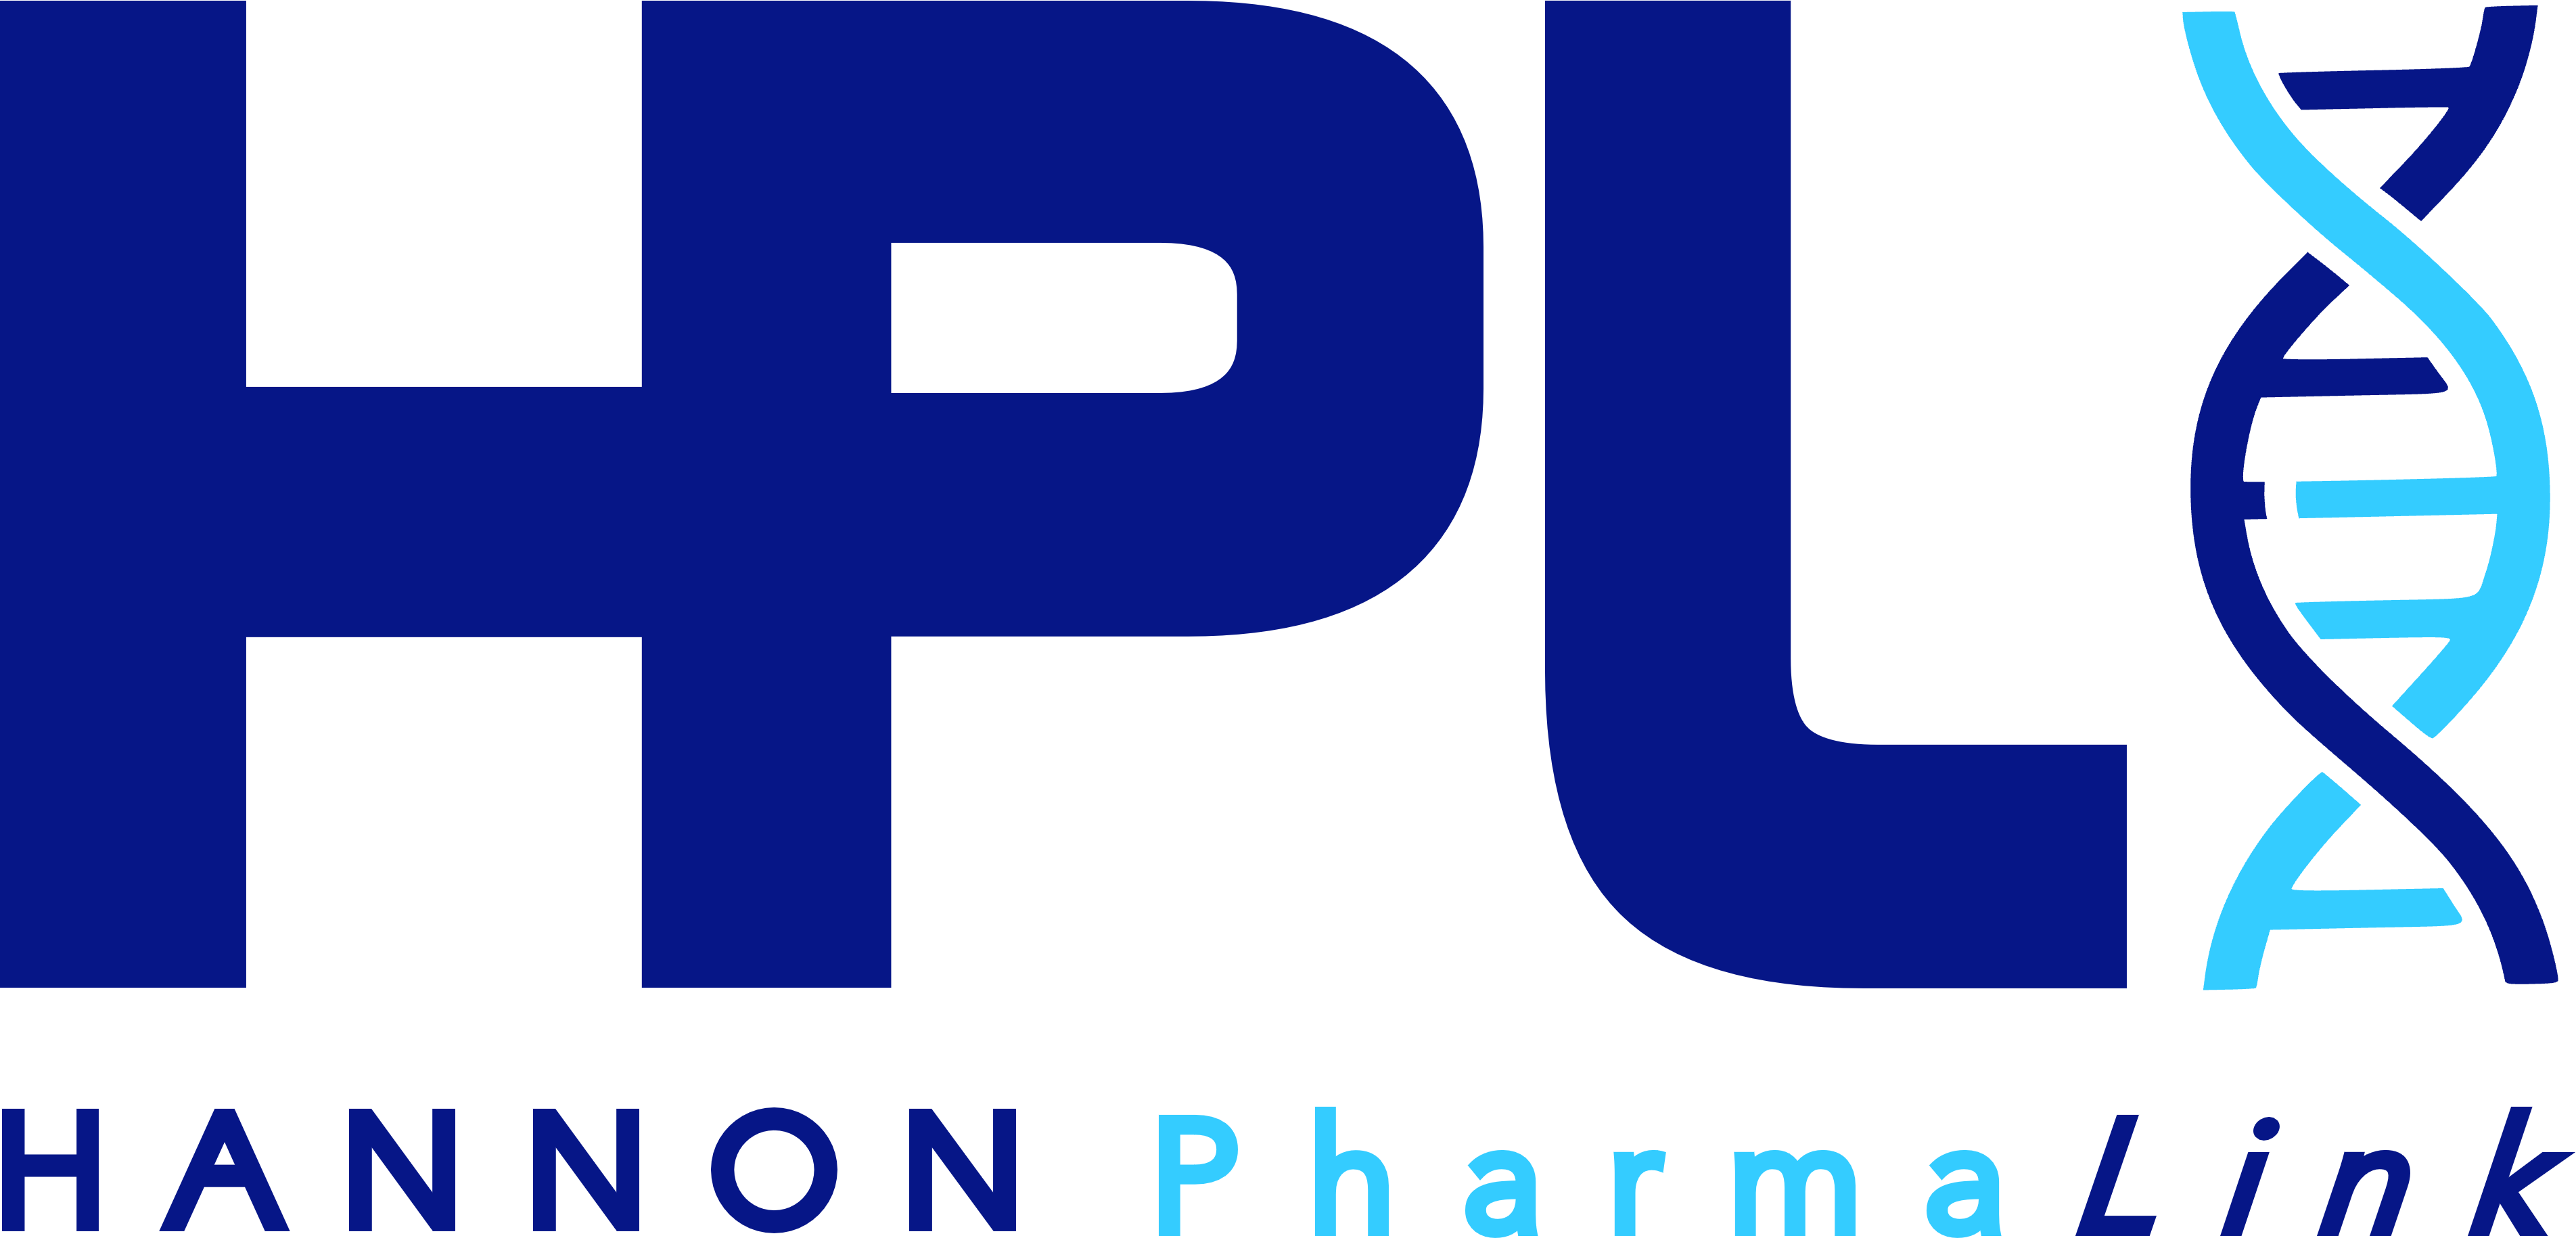 HANNON Pharmalink - Dedicated Pharma Logistics - Ireland, UK & Europe - Logo with Text